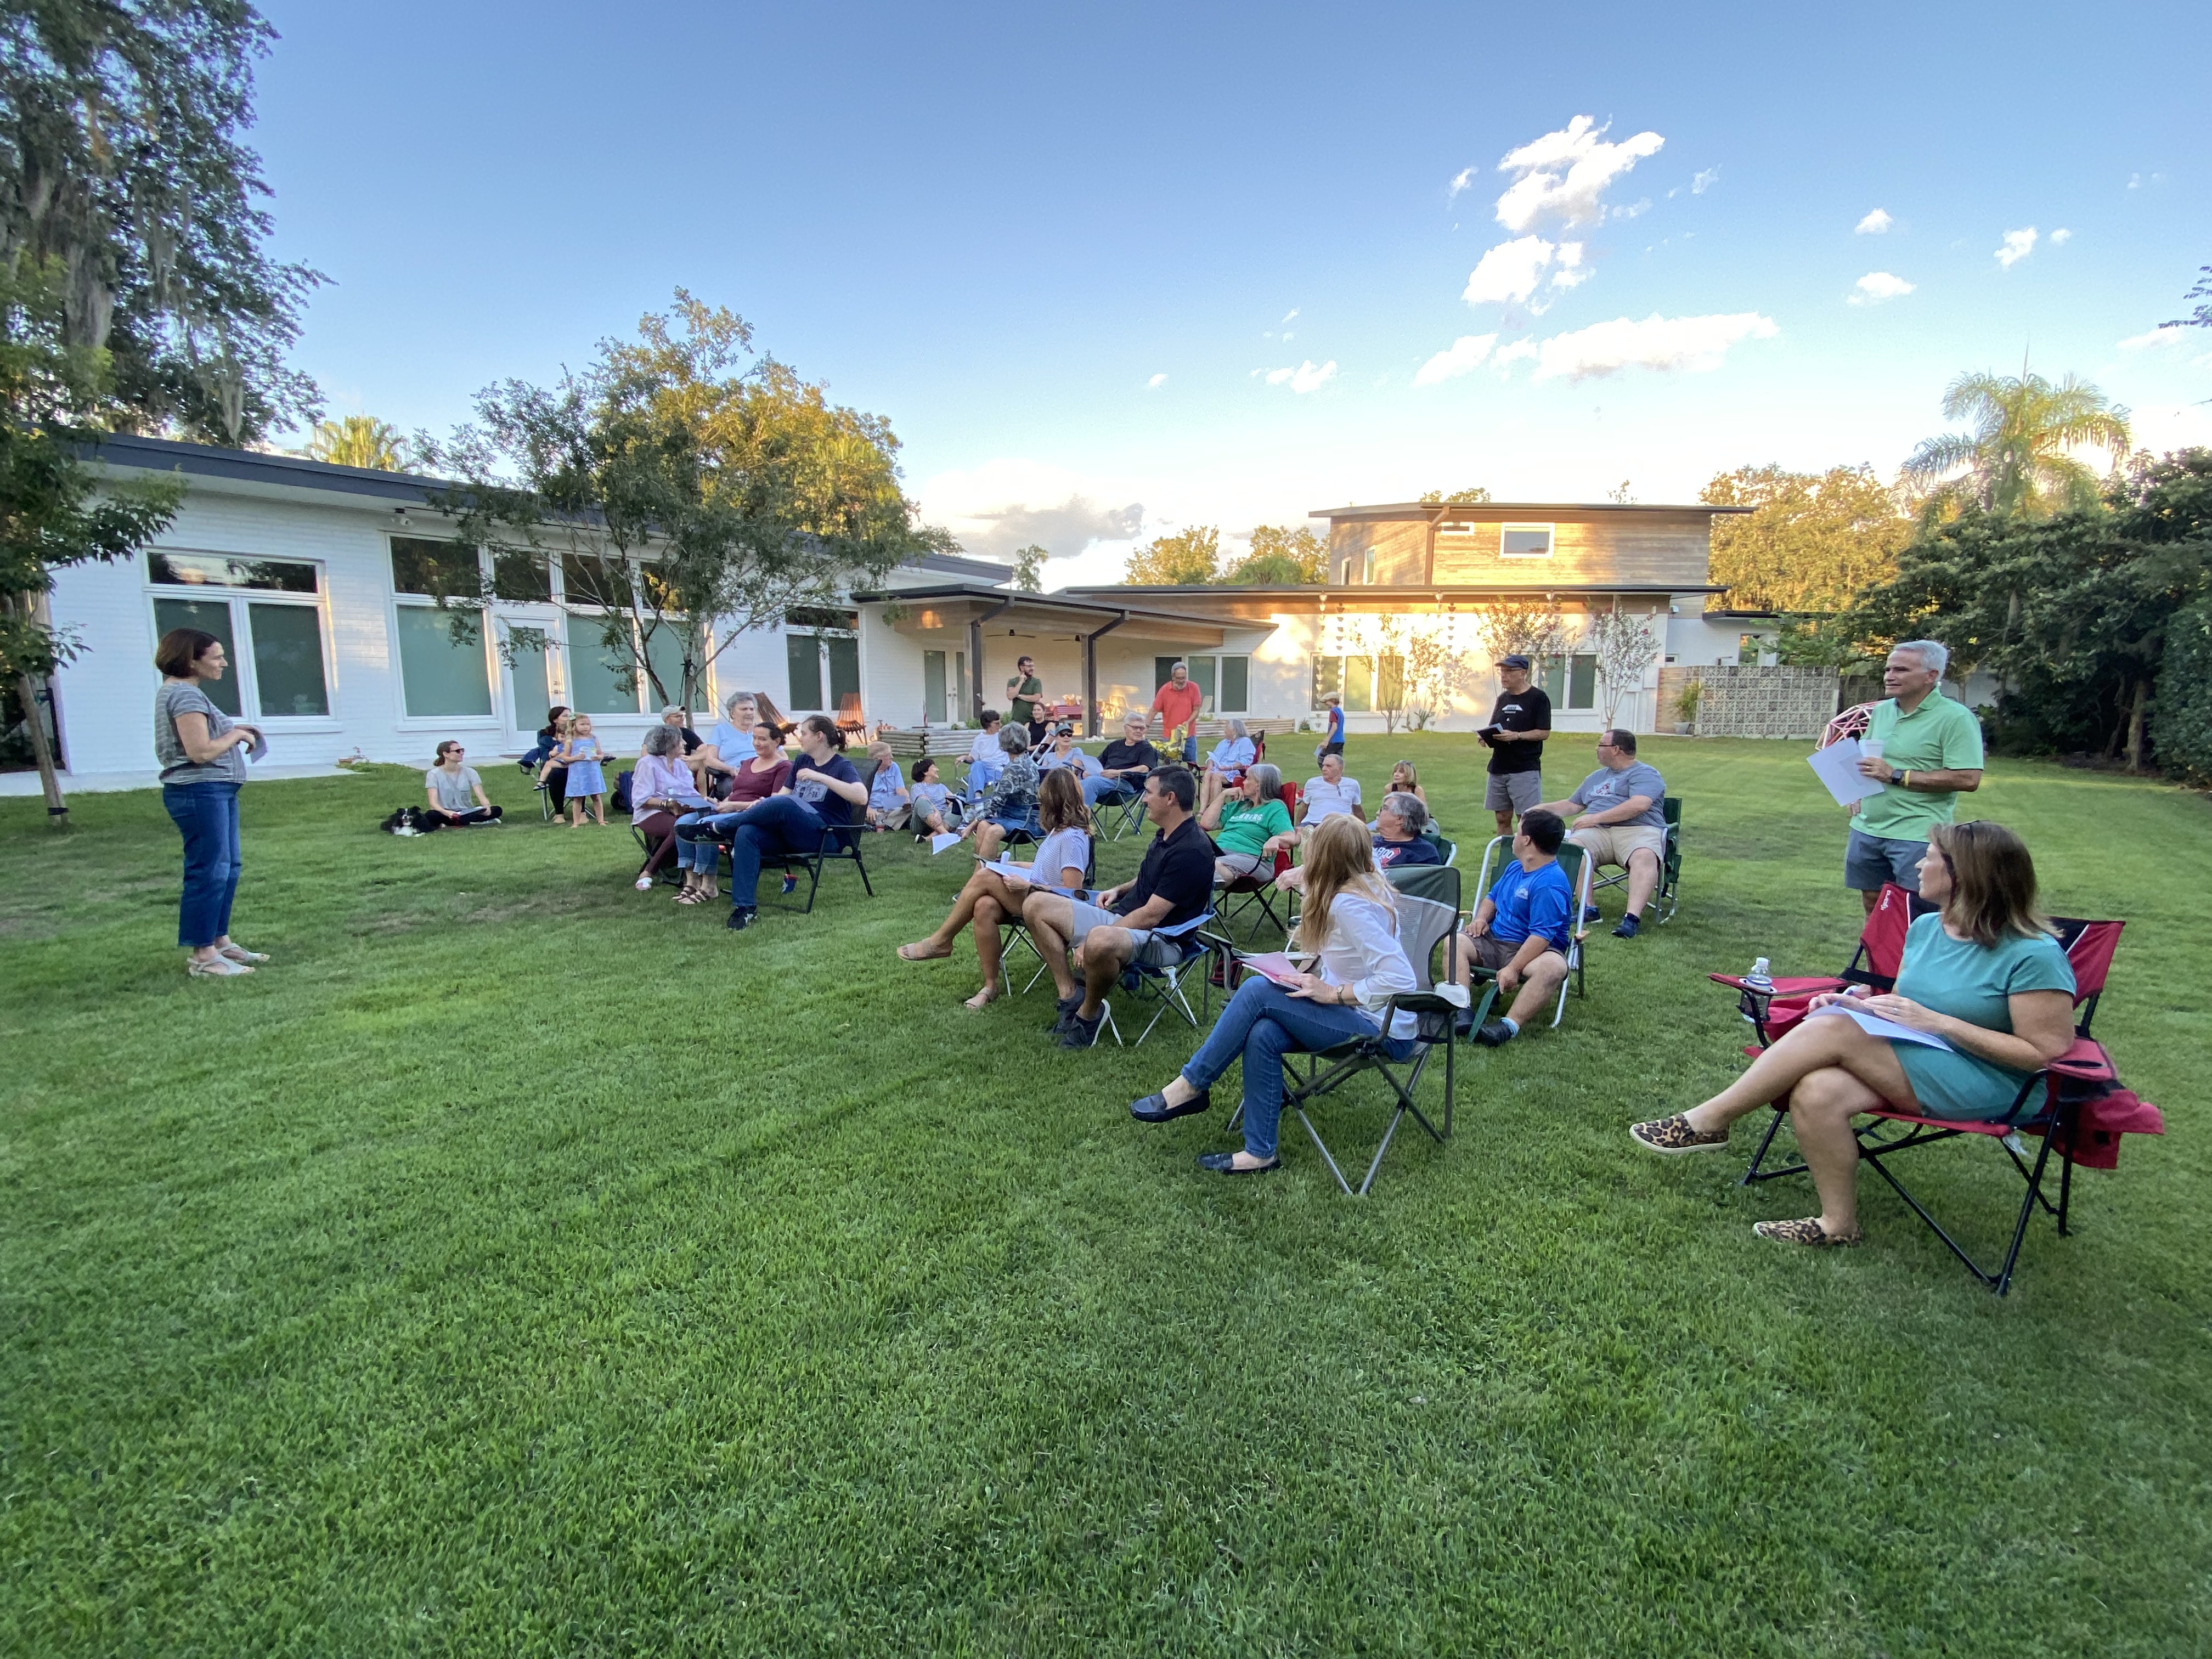 Neighborhood association meetings are often backyard events in Historic Beacon Hill.